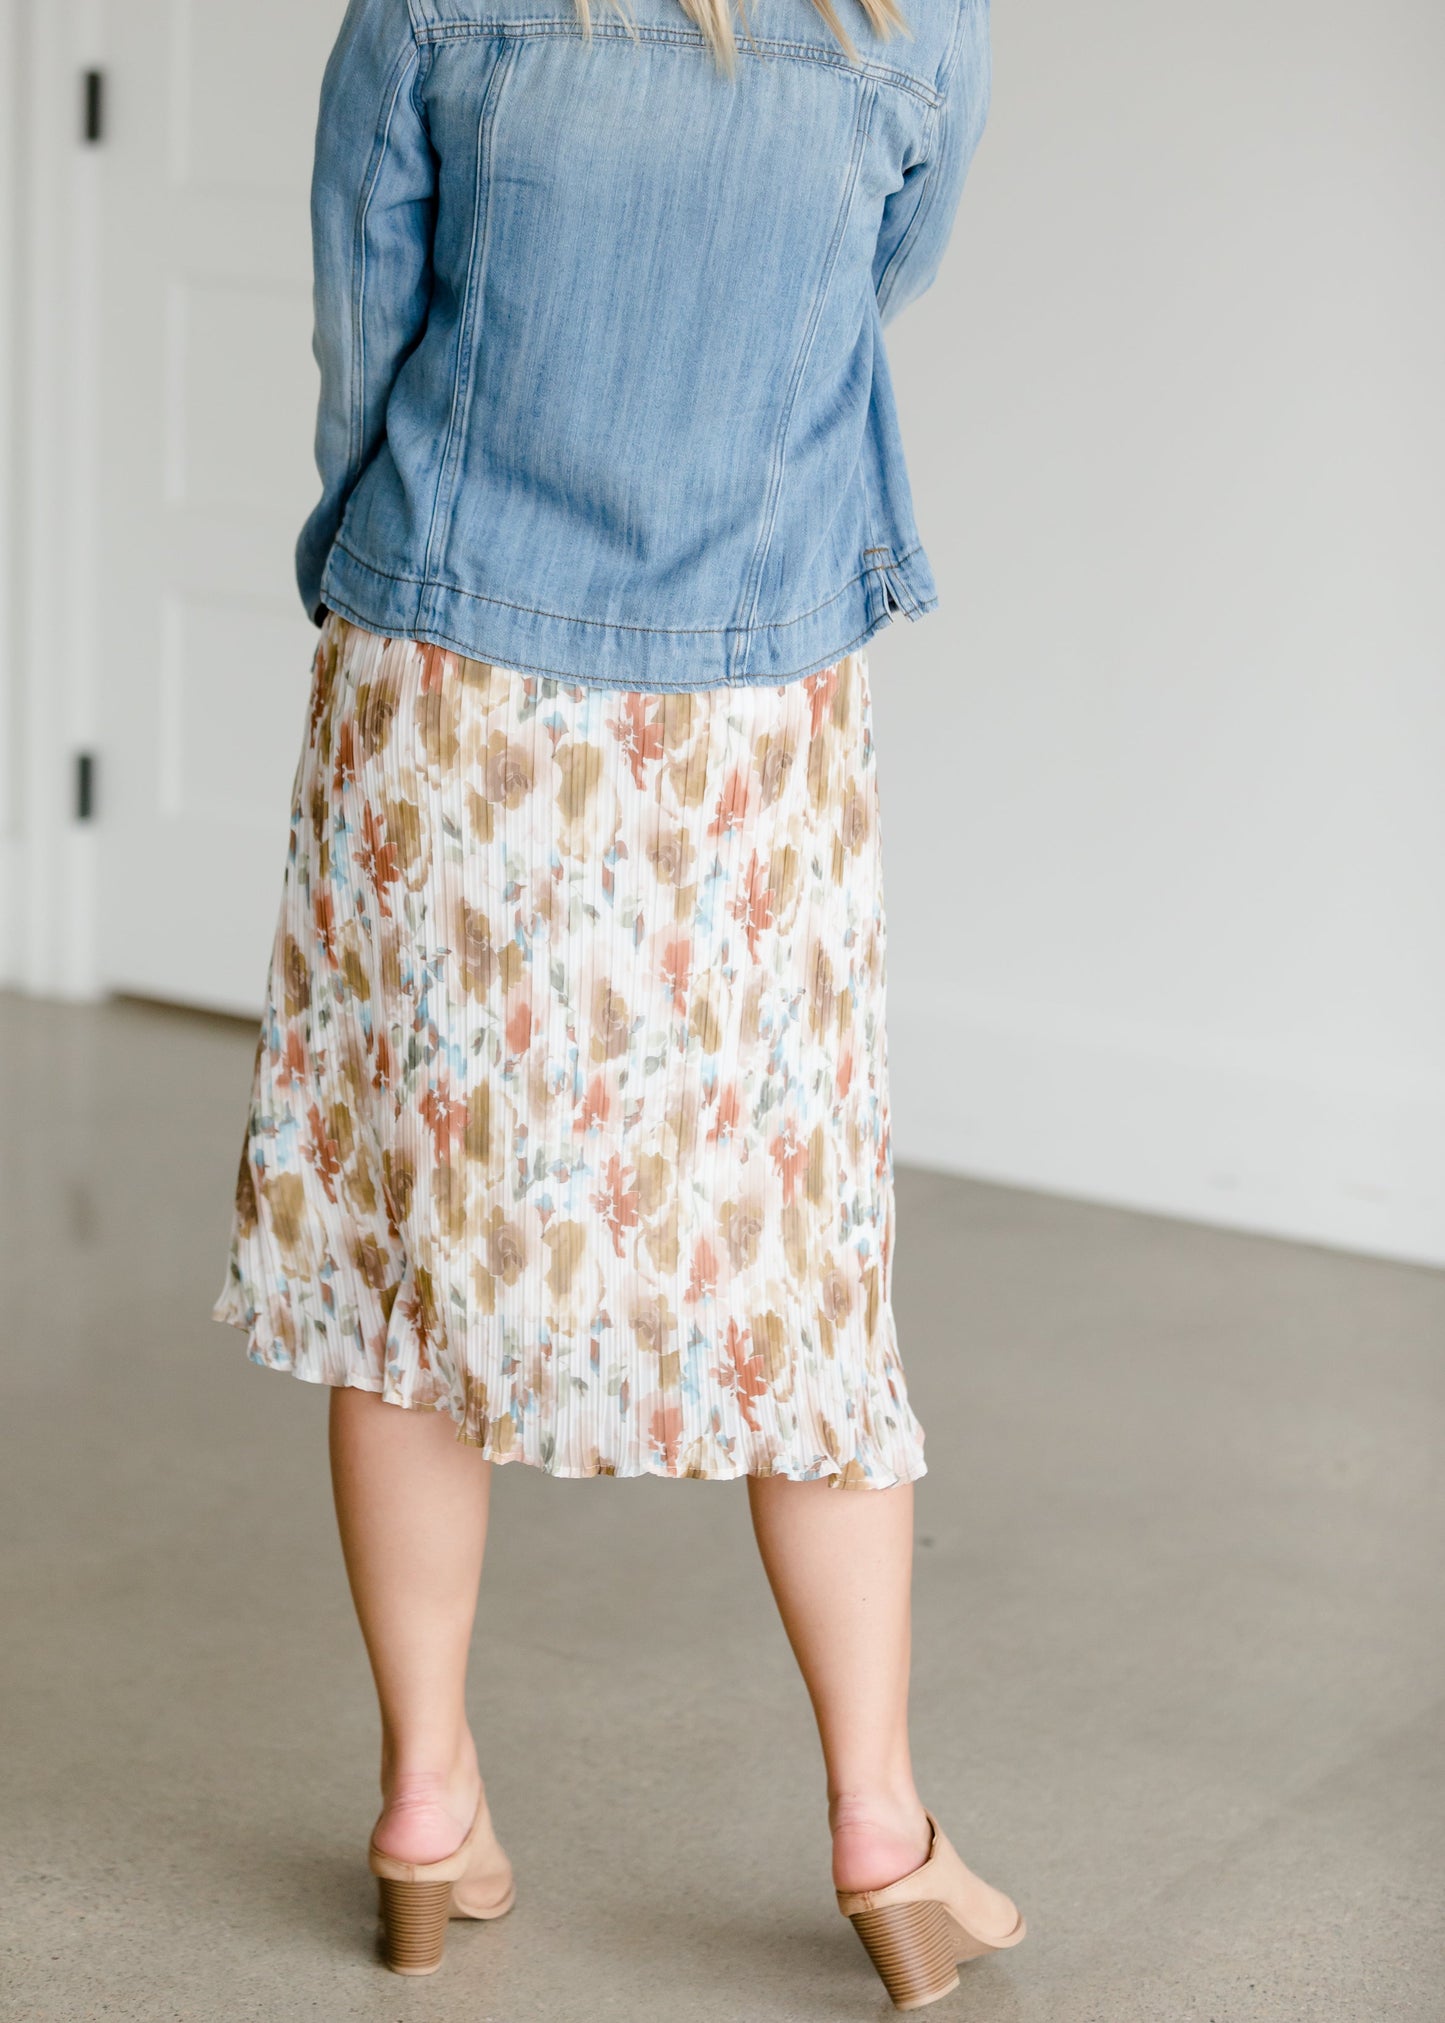 Floral Pleated Midi Skirt - FINAL SALE Skirts